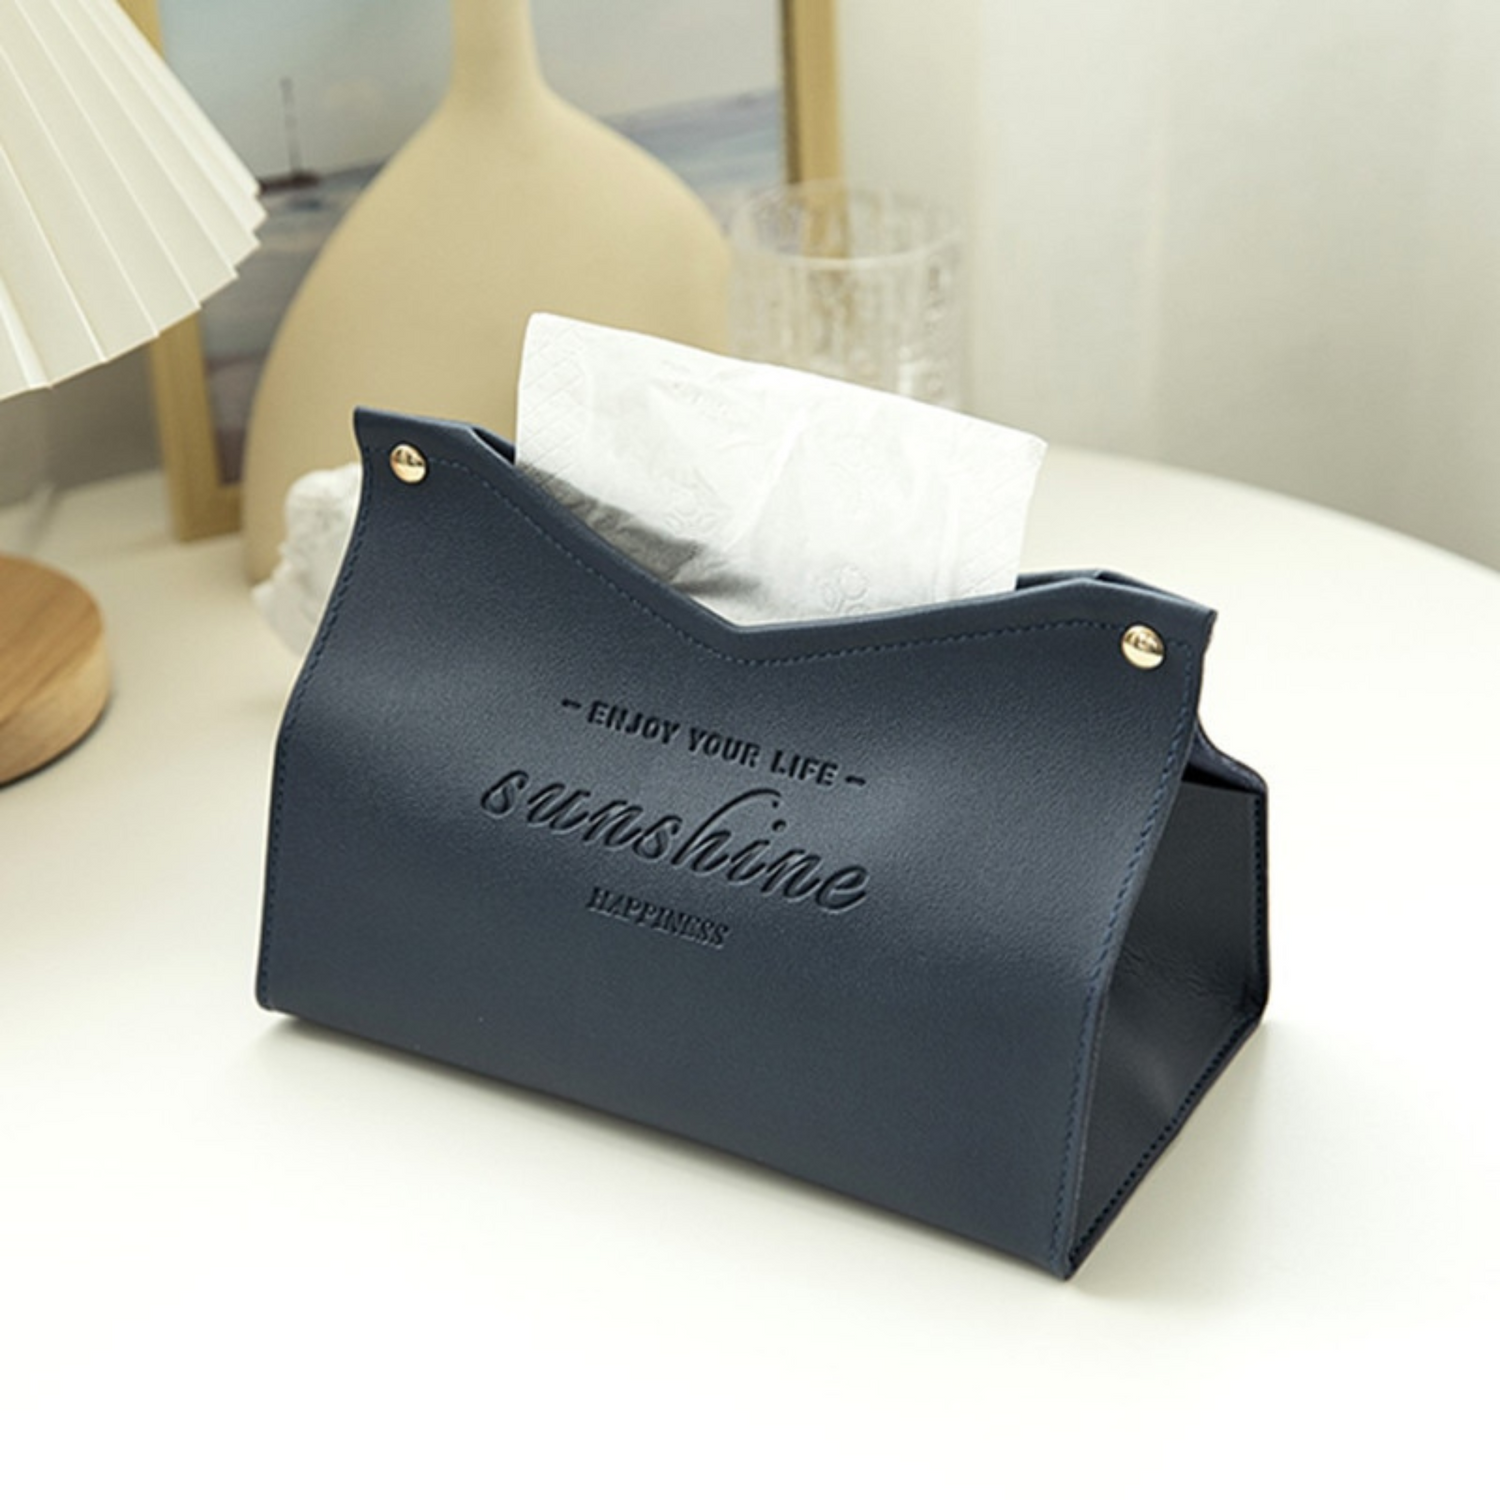 Blue tissue box holder